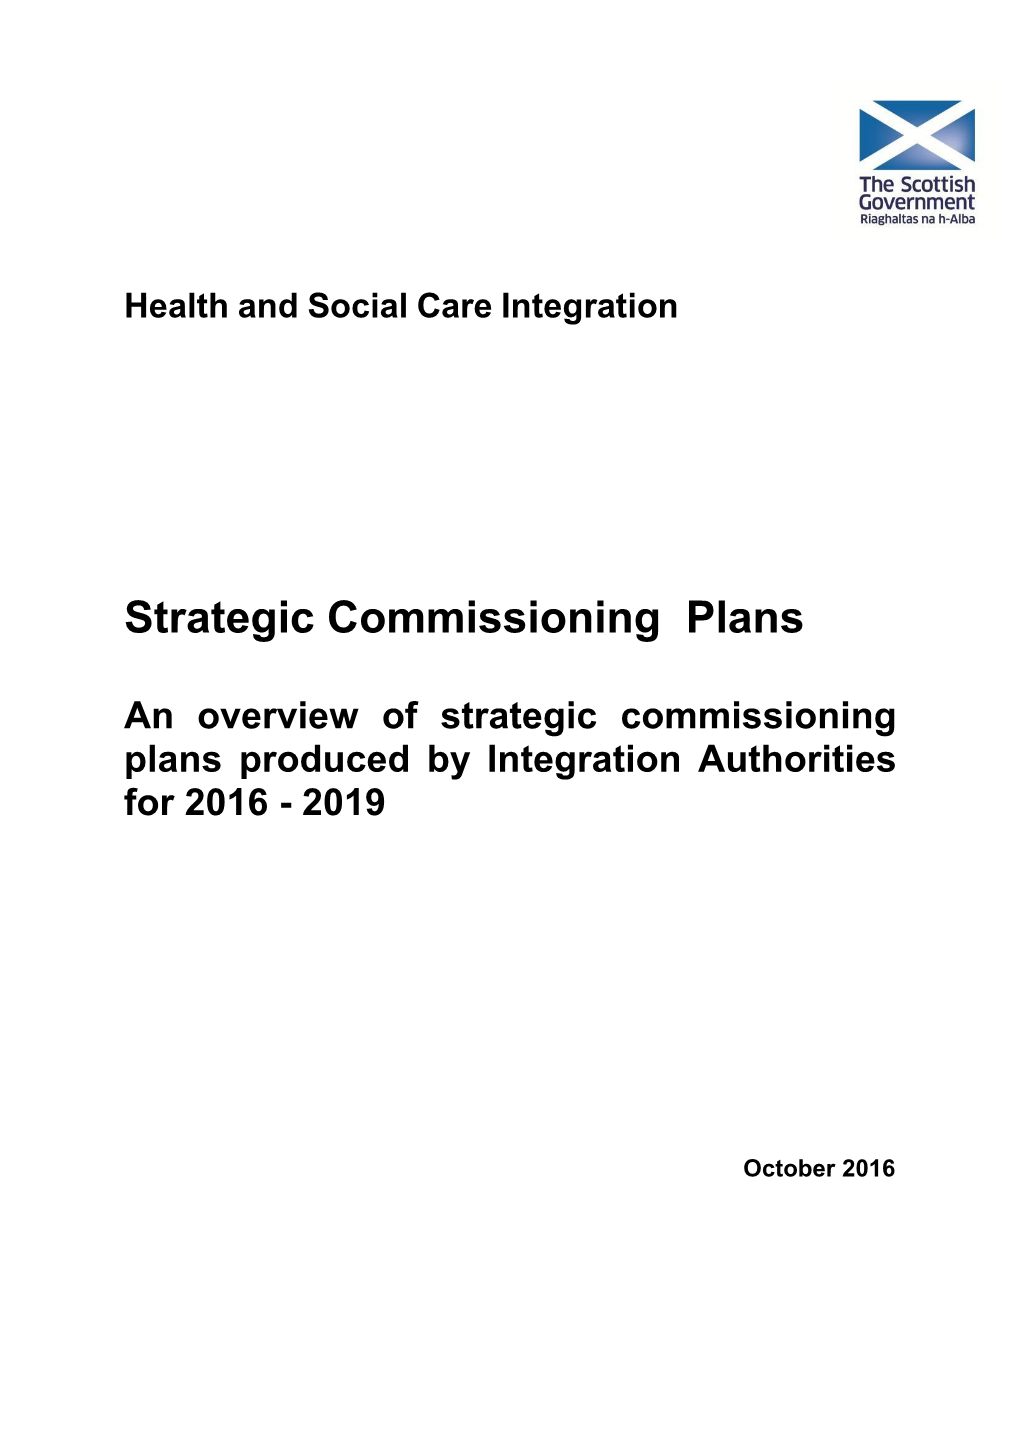 Strategic Commissioning Plans